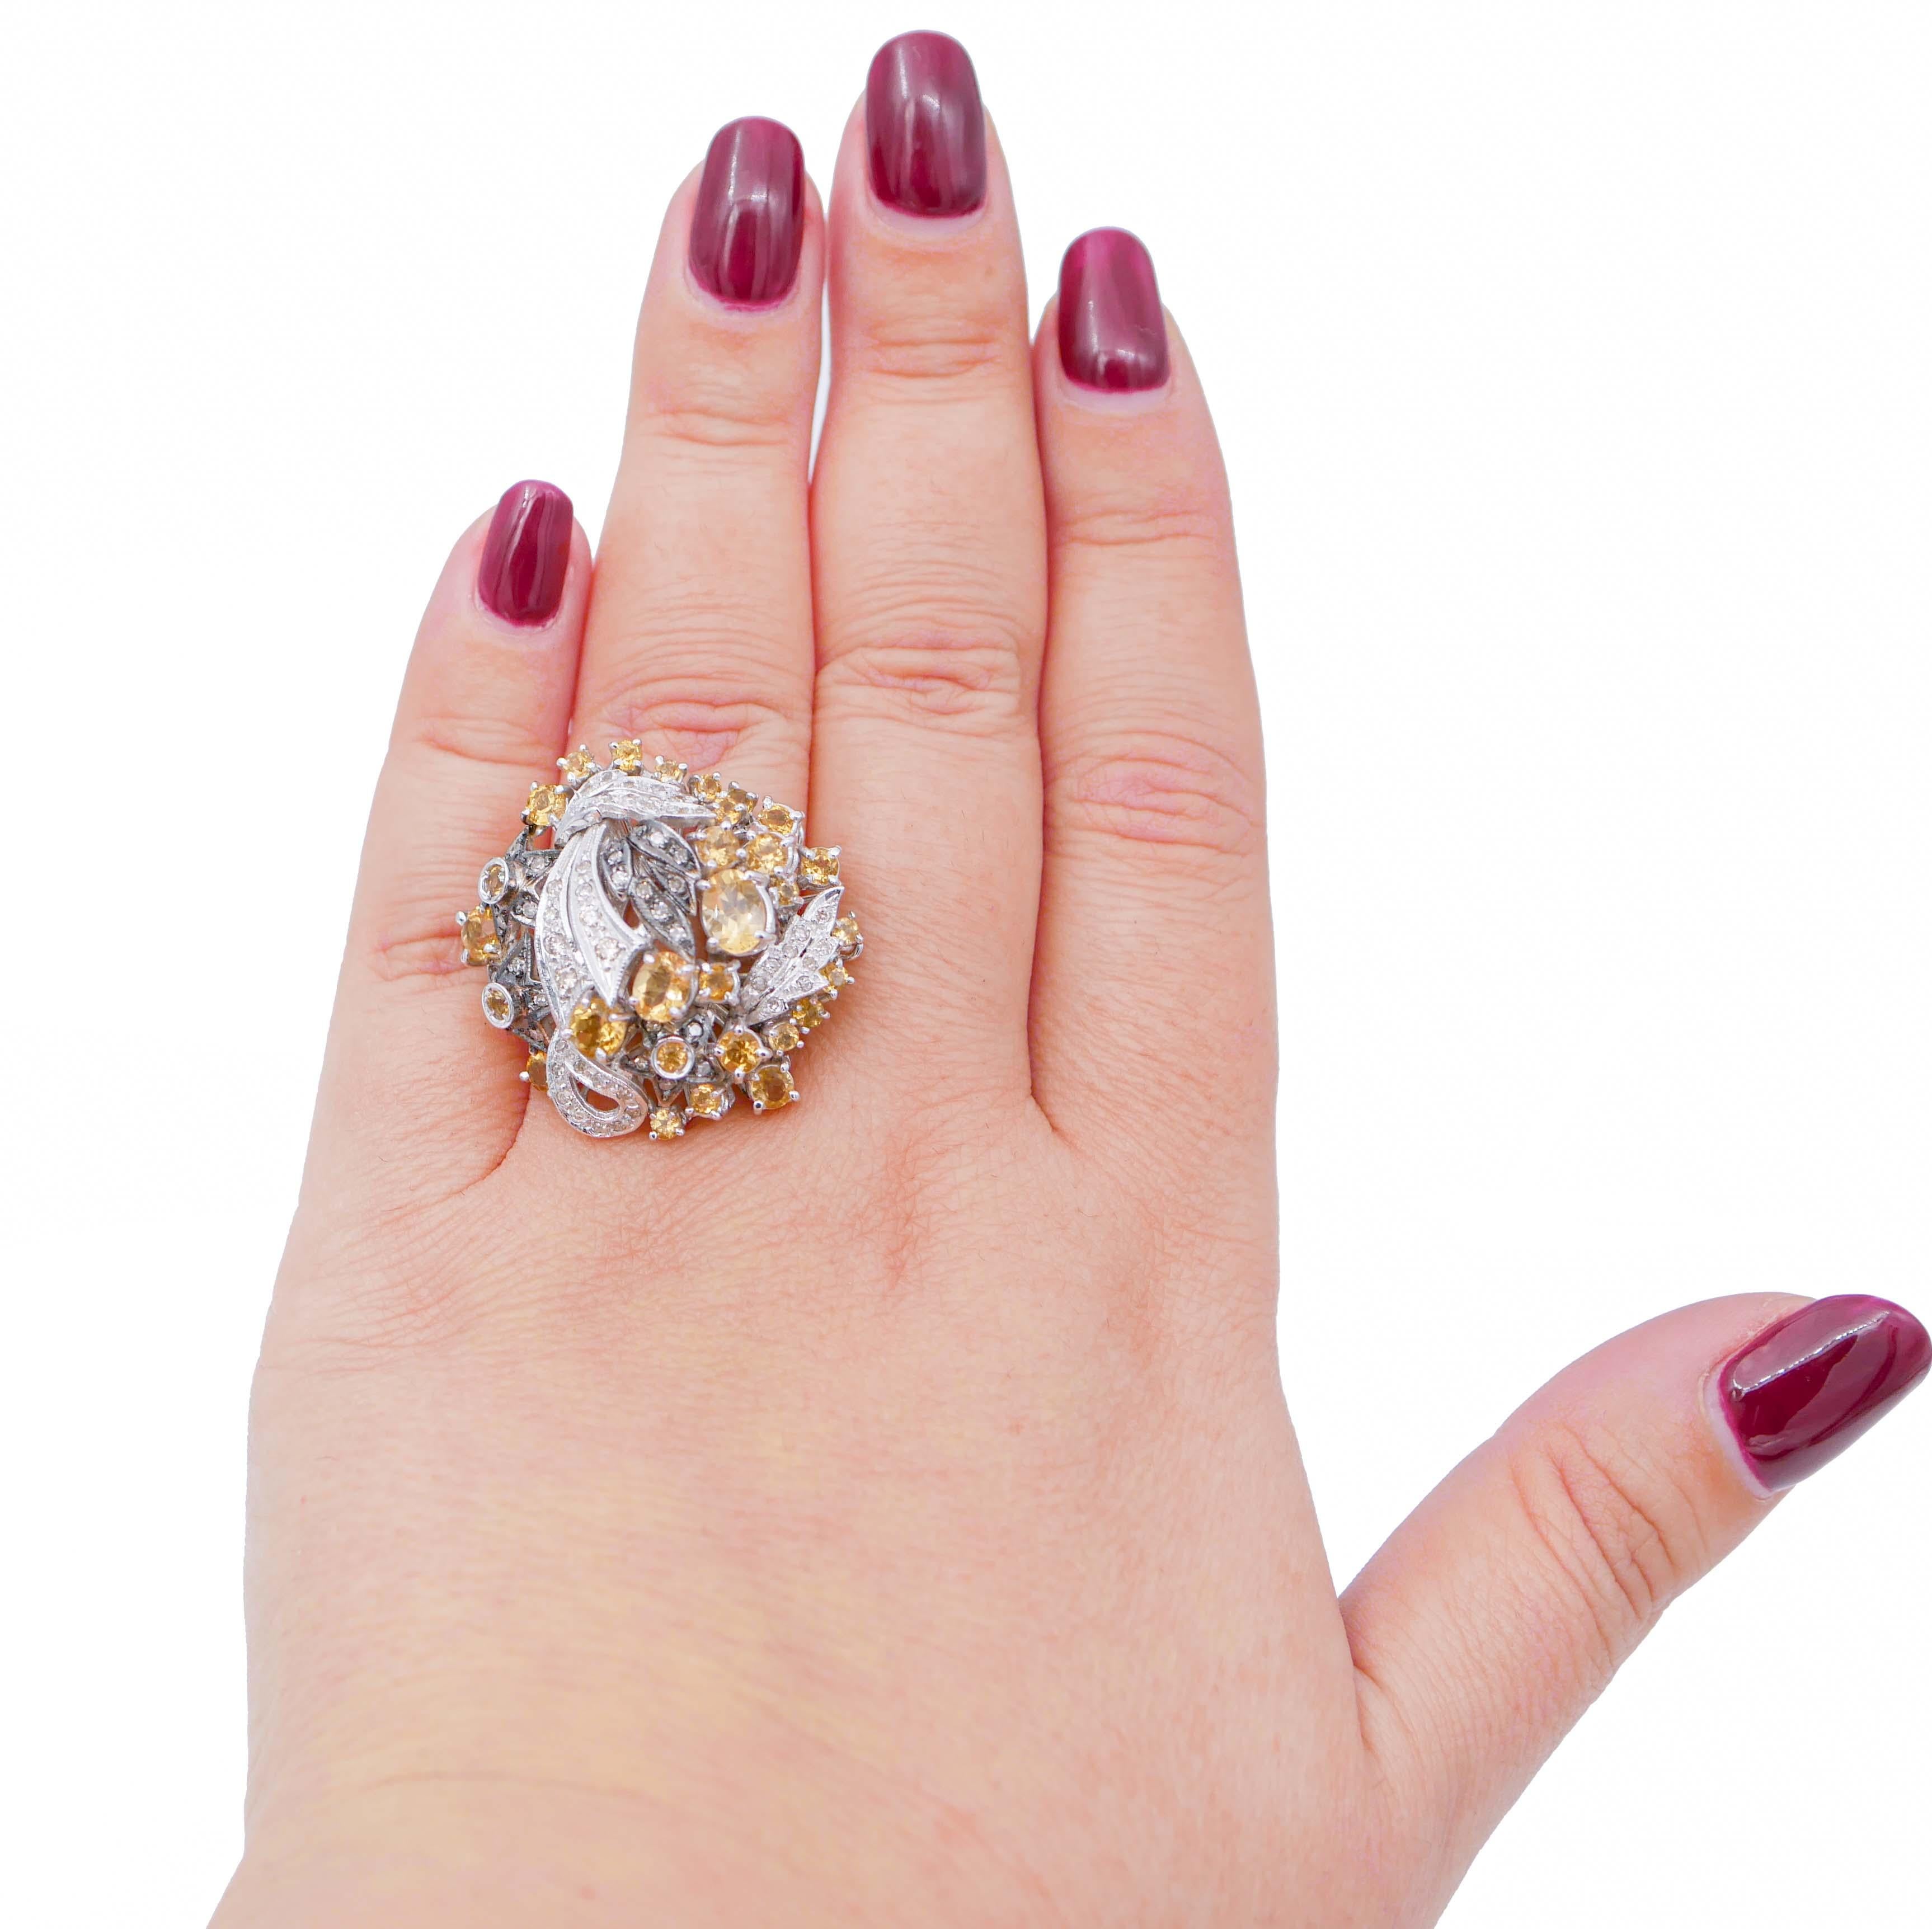 Mixed Cut Topazs, Diamonds, 18 Karat White Gold Ring For Sale